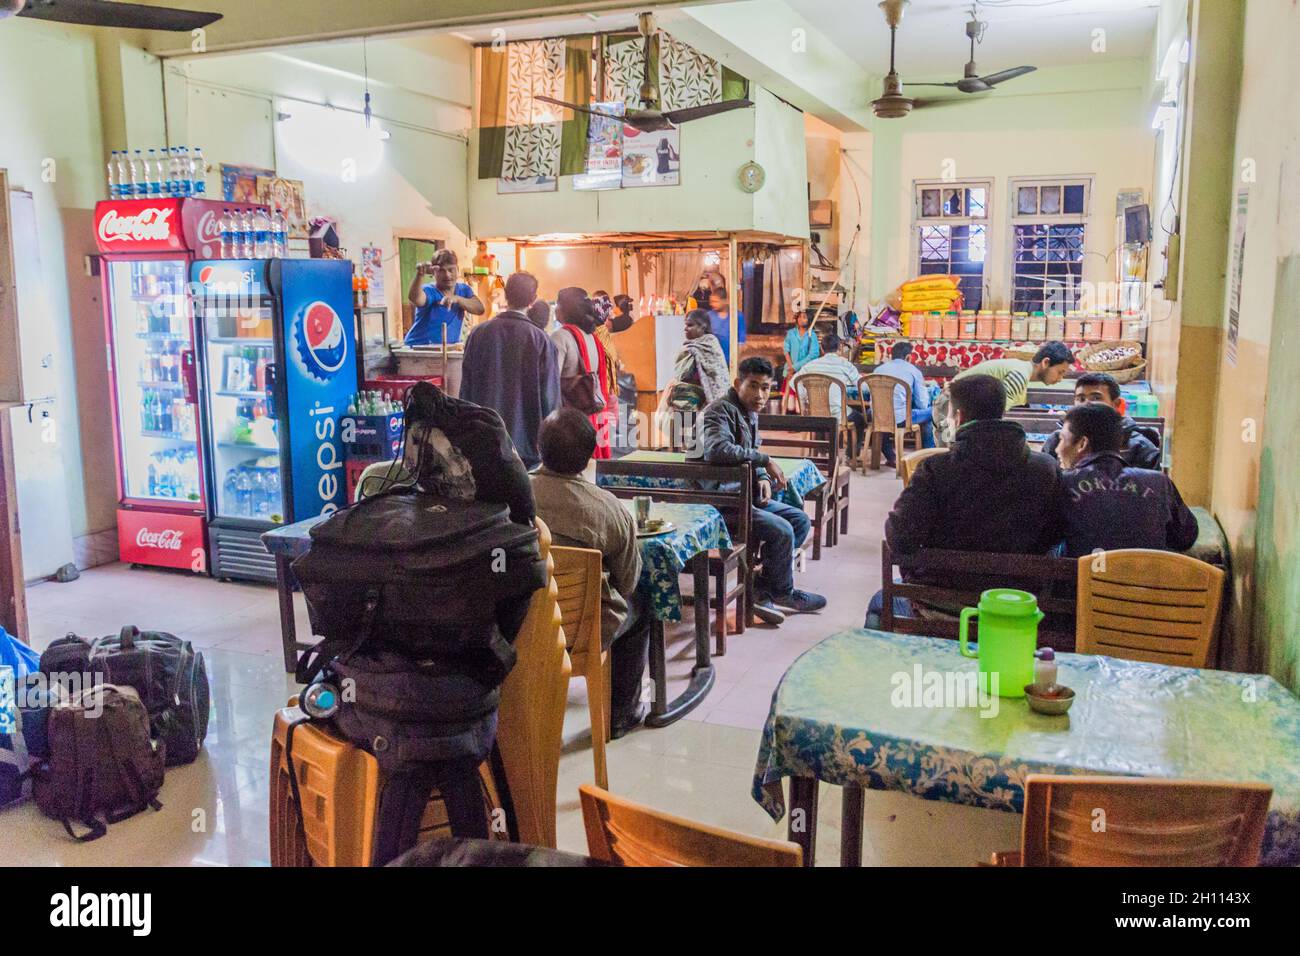 GUWAHATI, INDIA - JANUARY 28, 2017: Interior of a small restaurant in Guwahati, Assam state, India Stock Photo